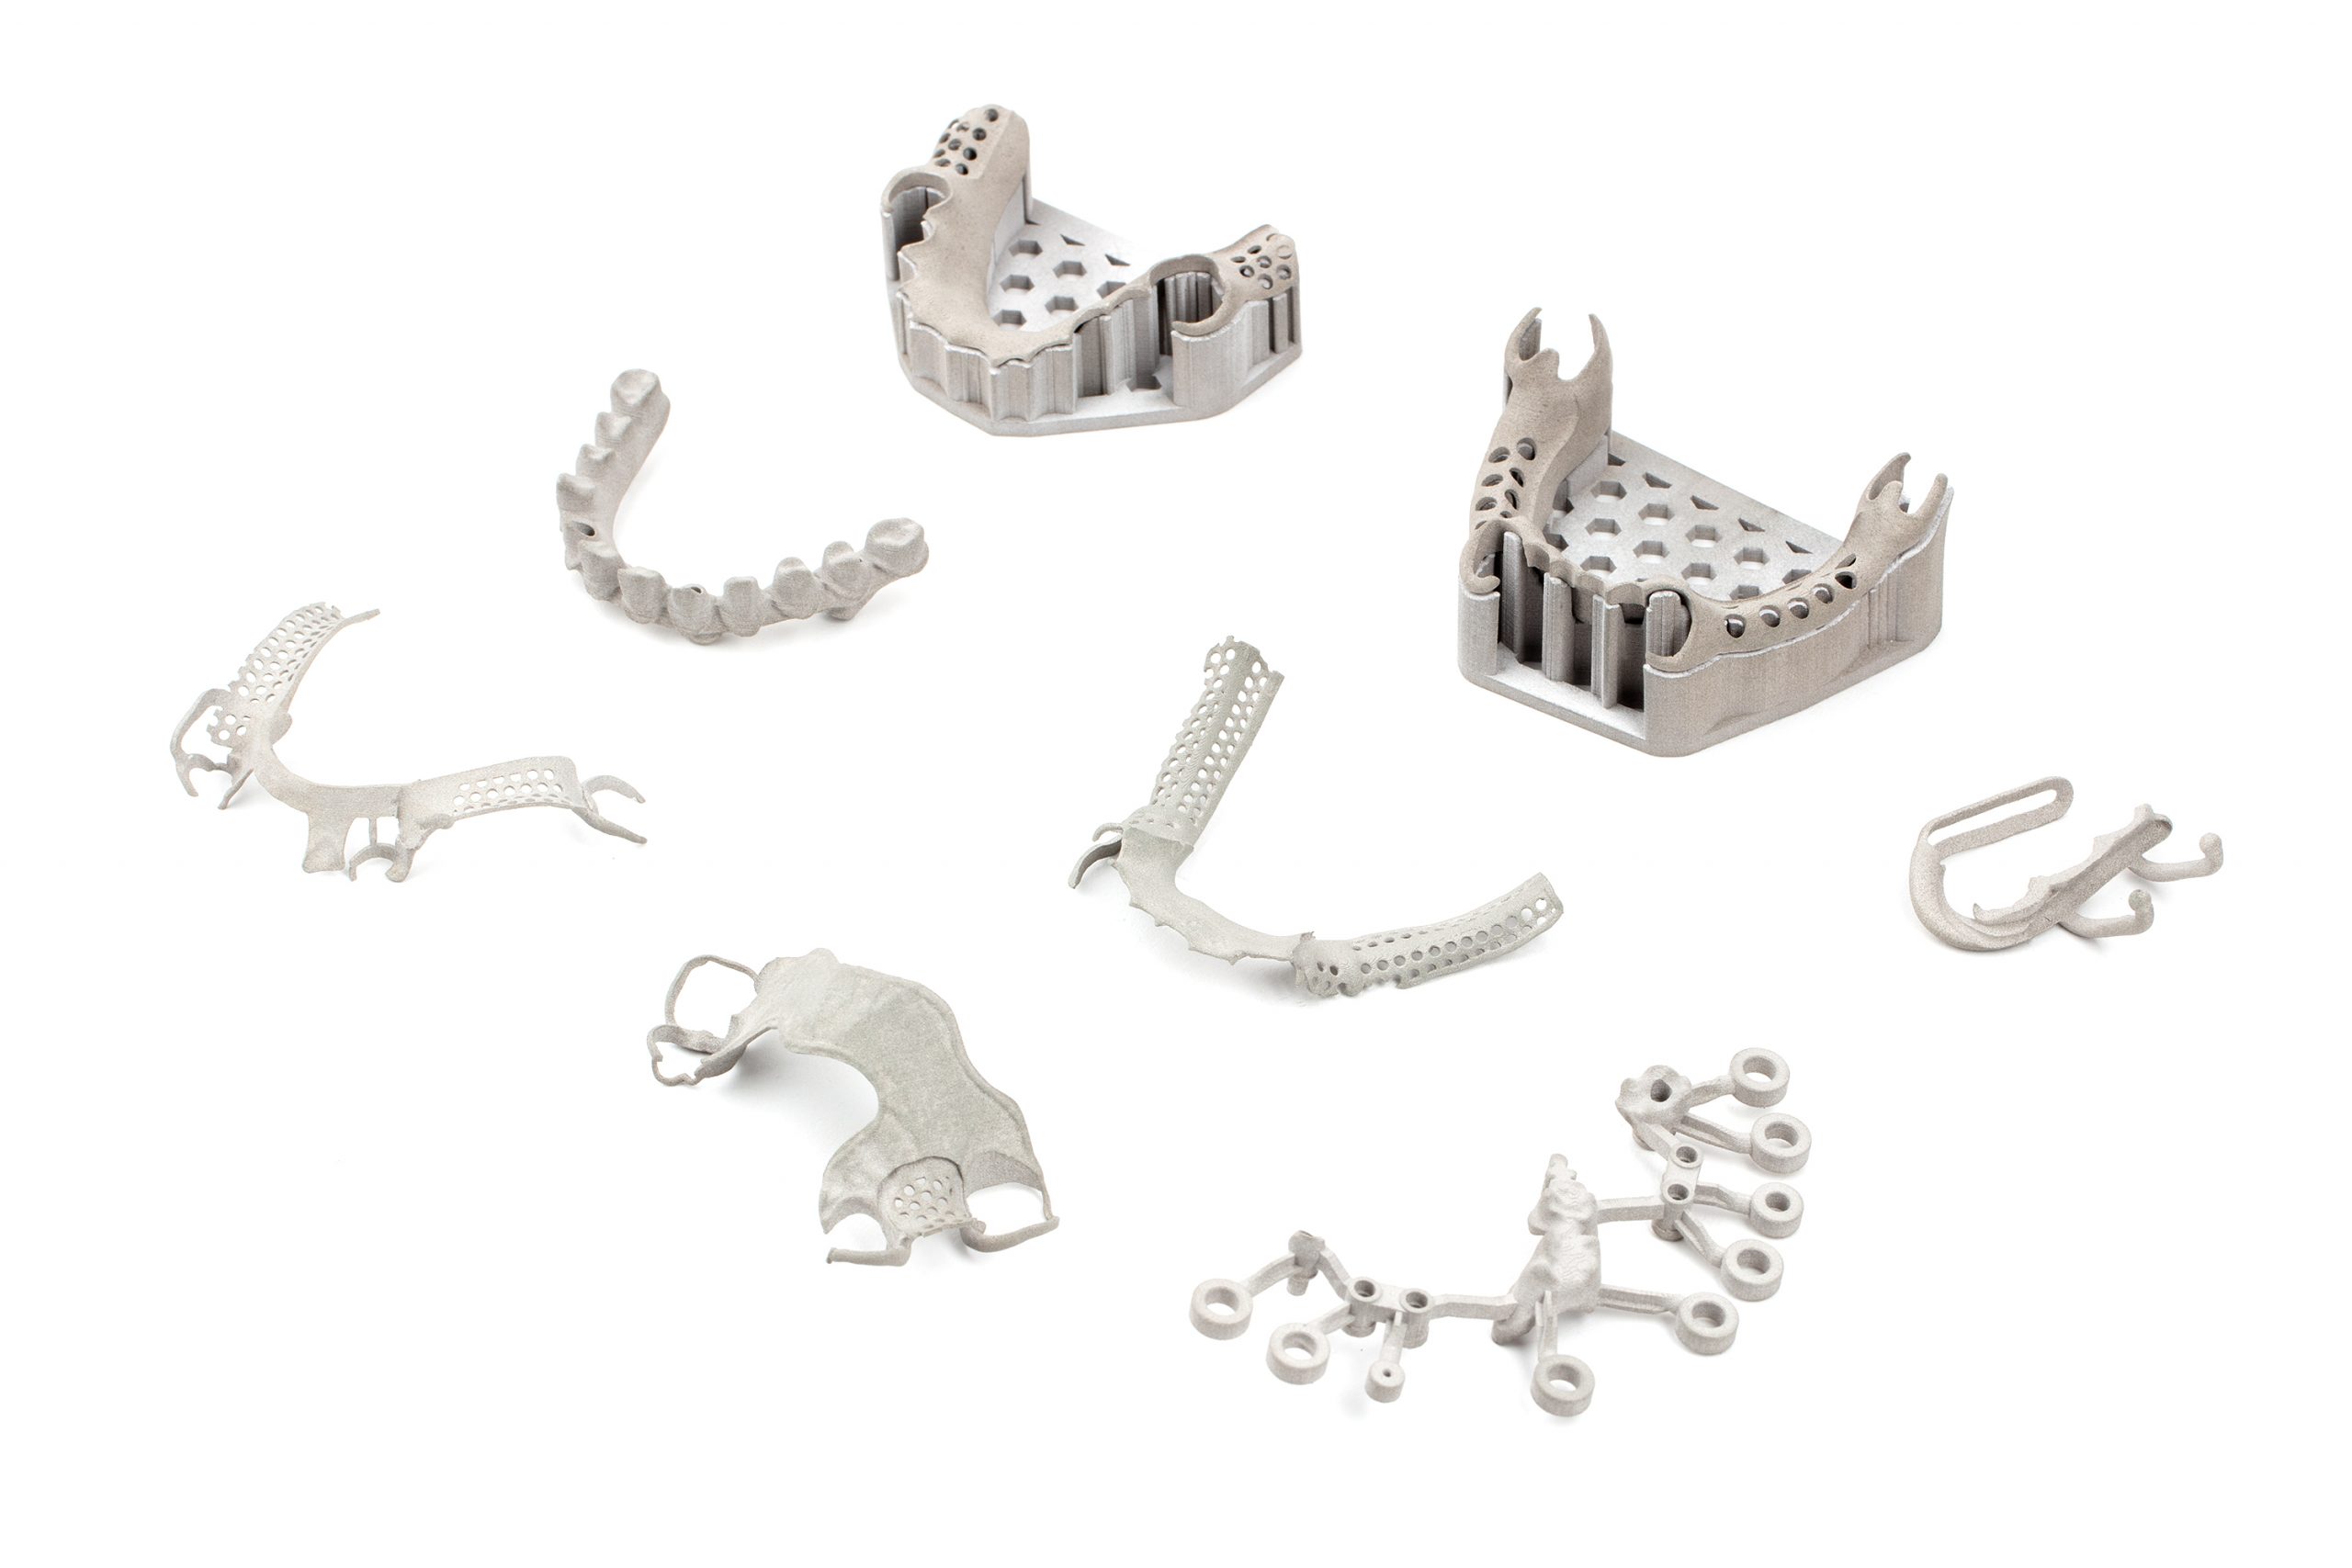 Dental applications 3D printed in chrome cobalt on Shop System. Photo via Desktop Health.